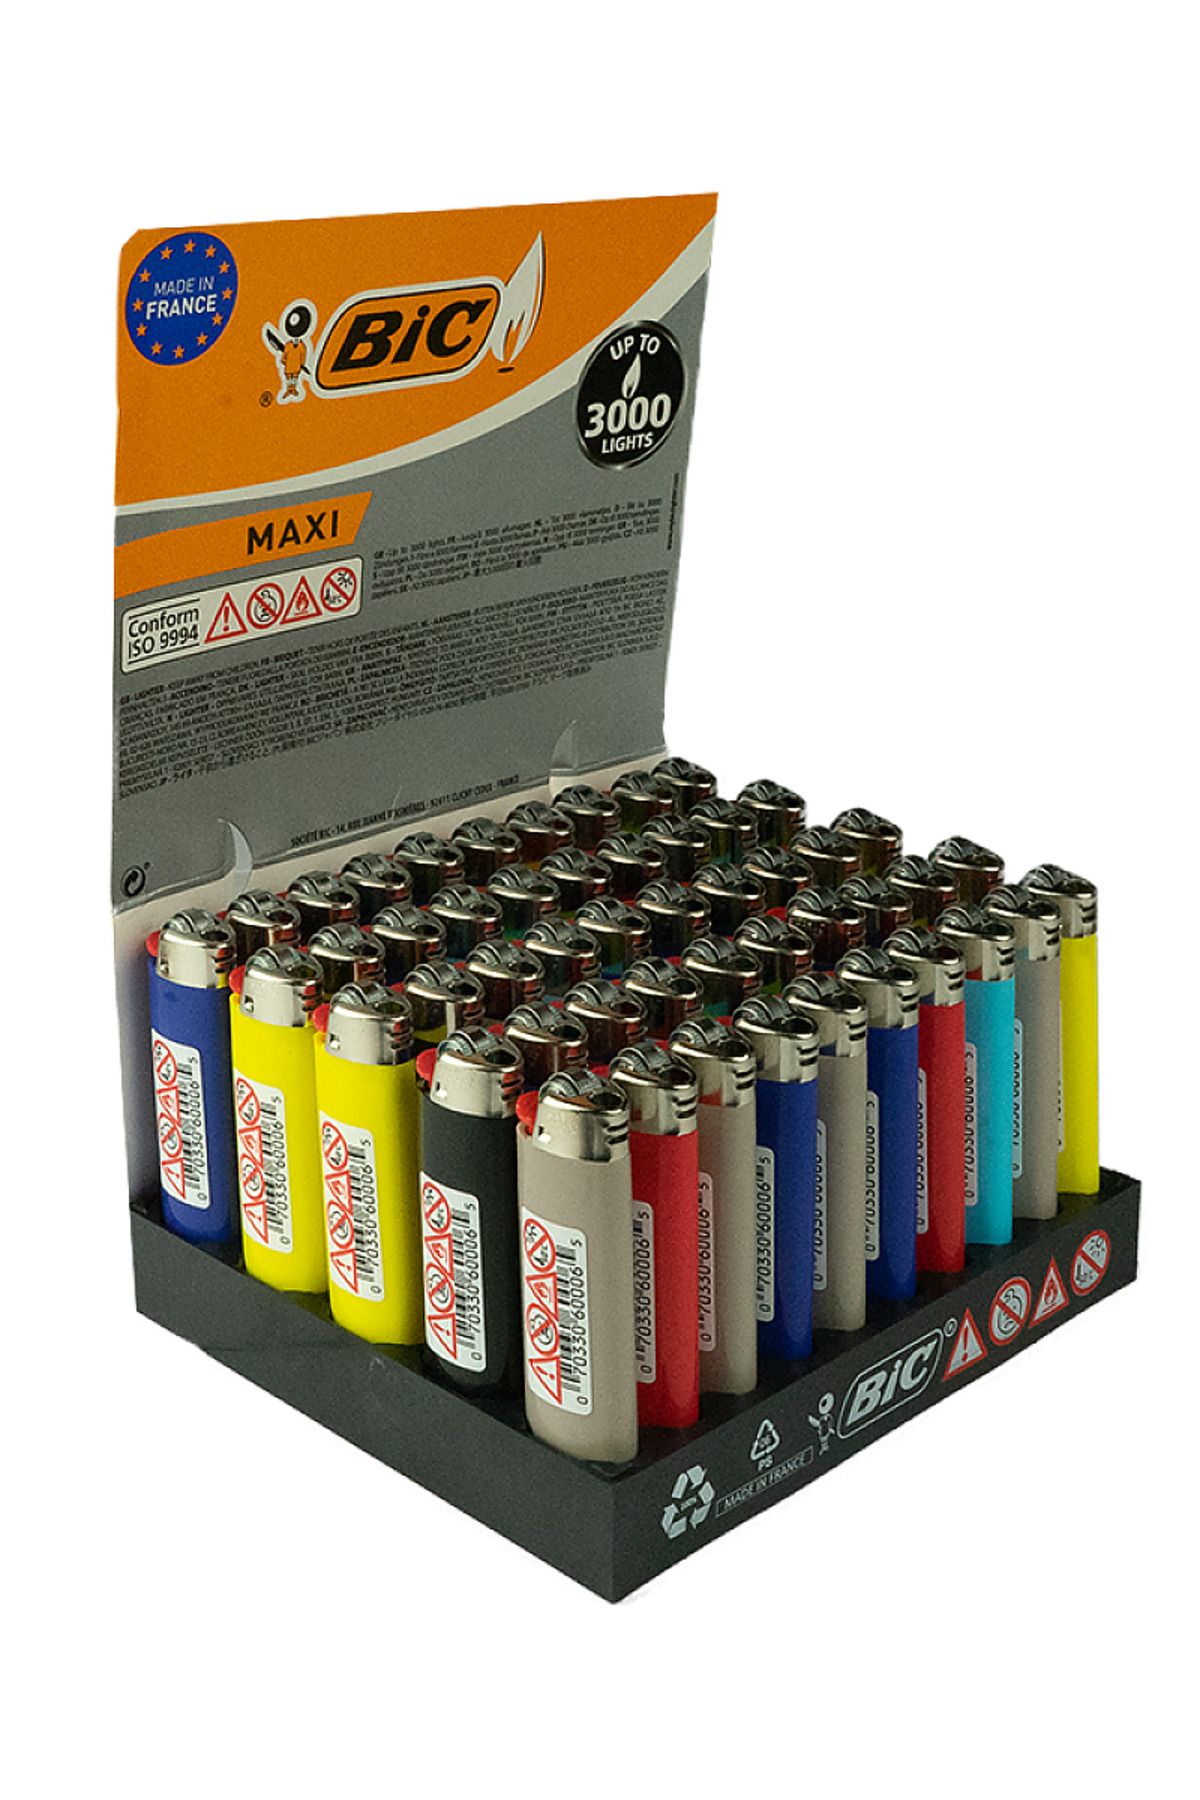 Bic J6 Maxi Çakmak Karışık Renk 1 Paket 50'li